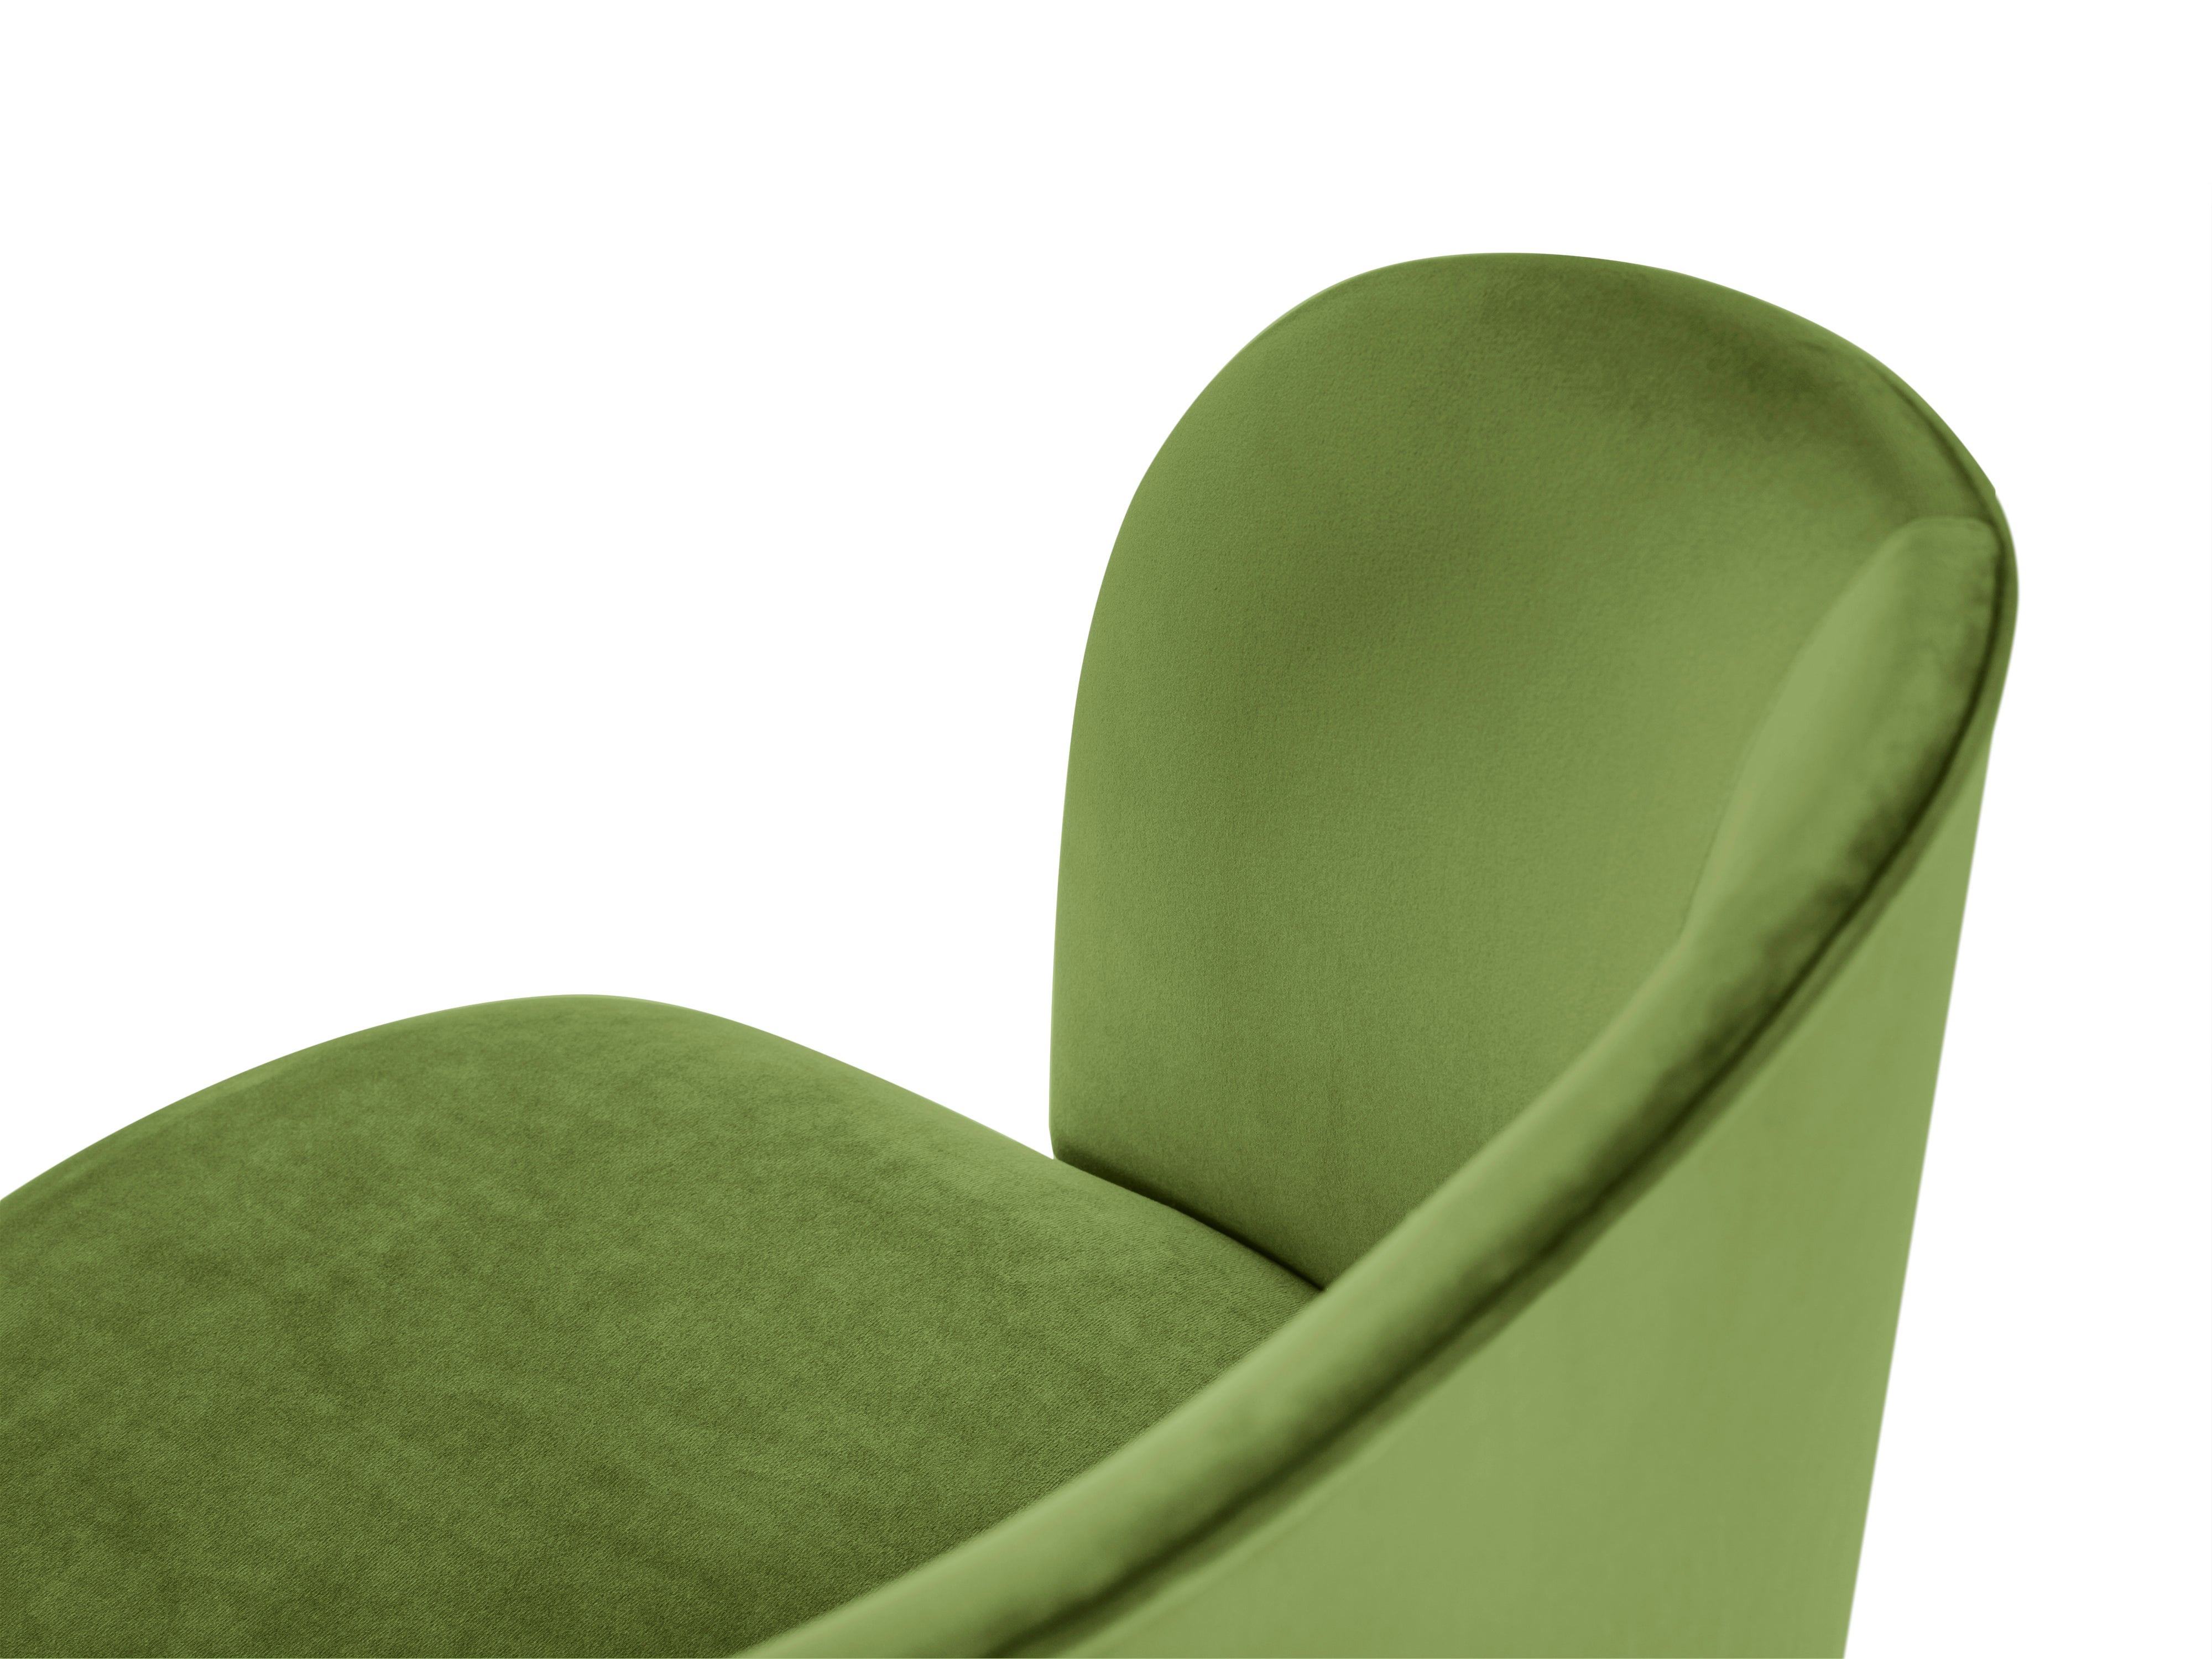 Green chair glossy